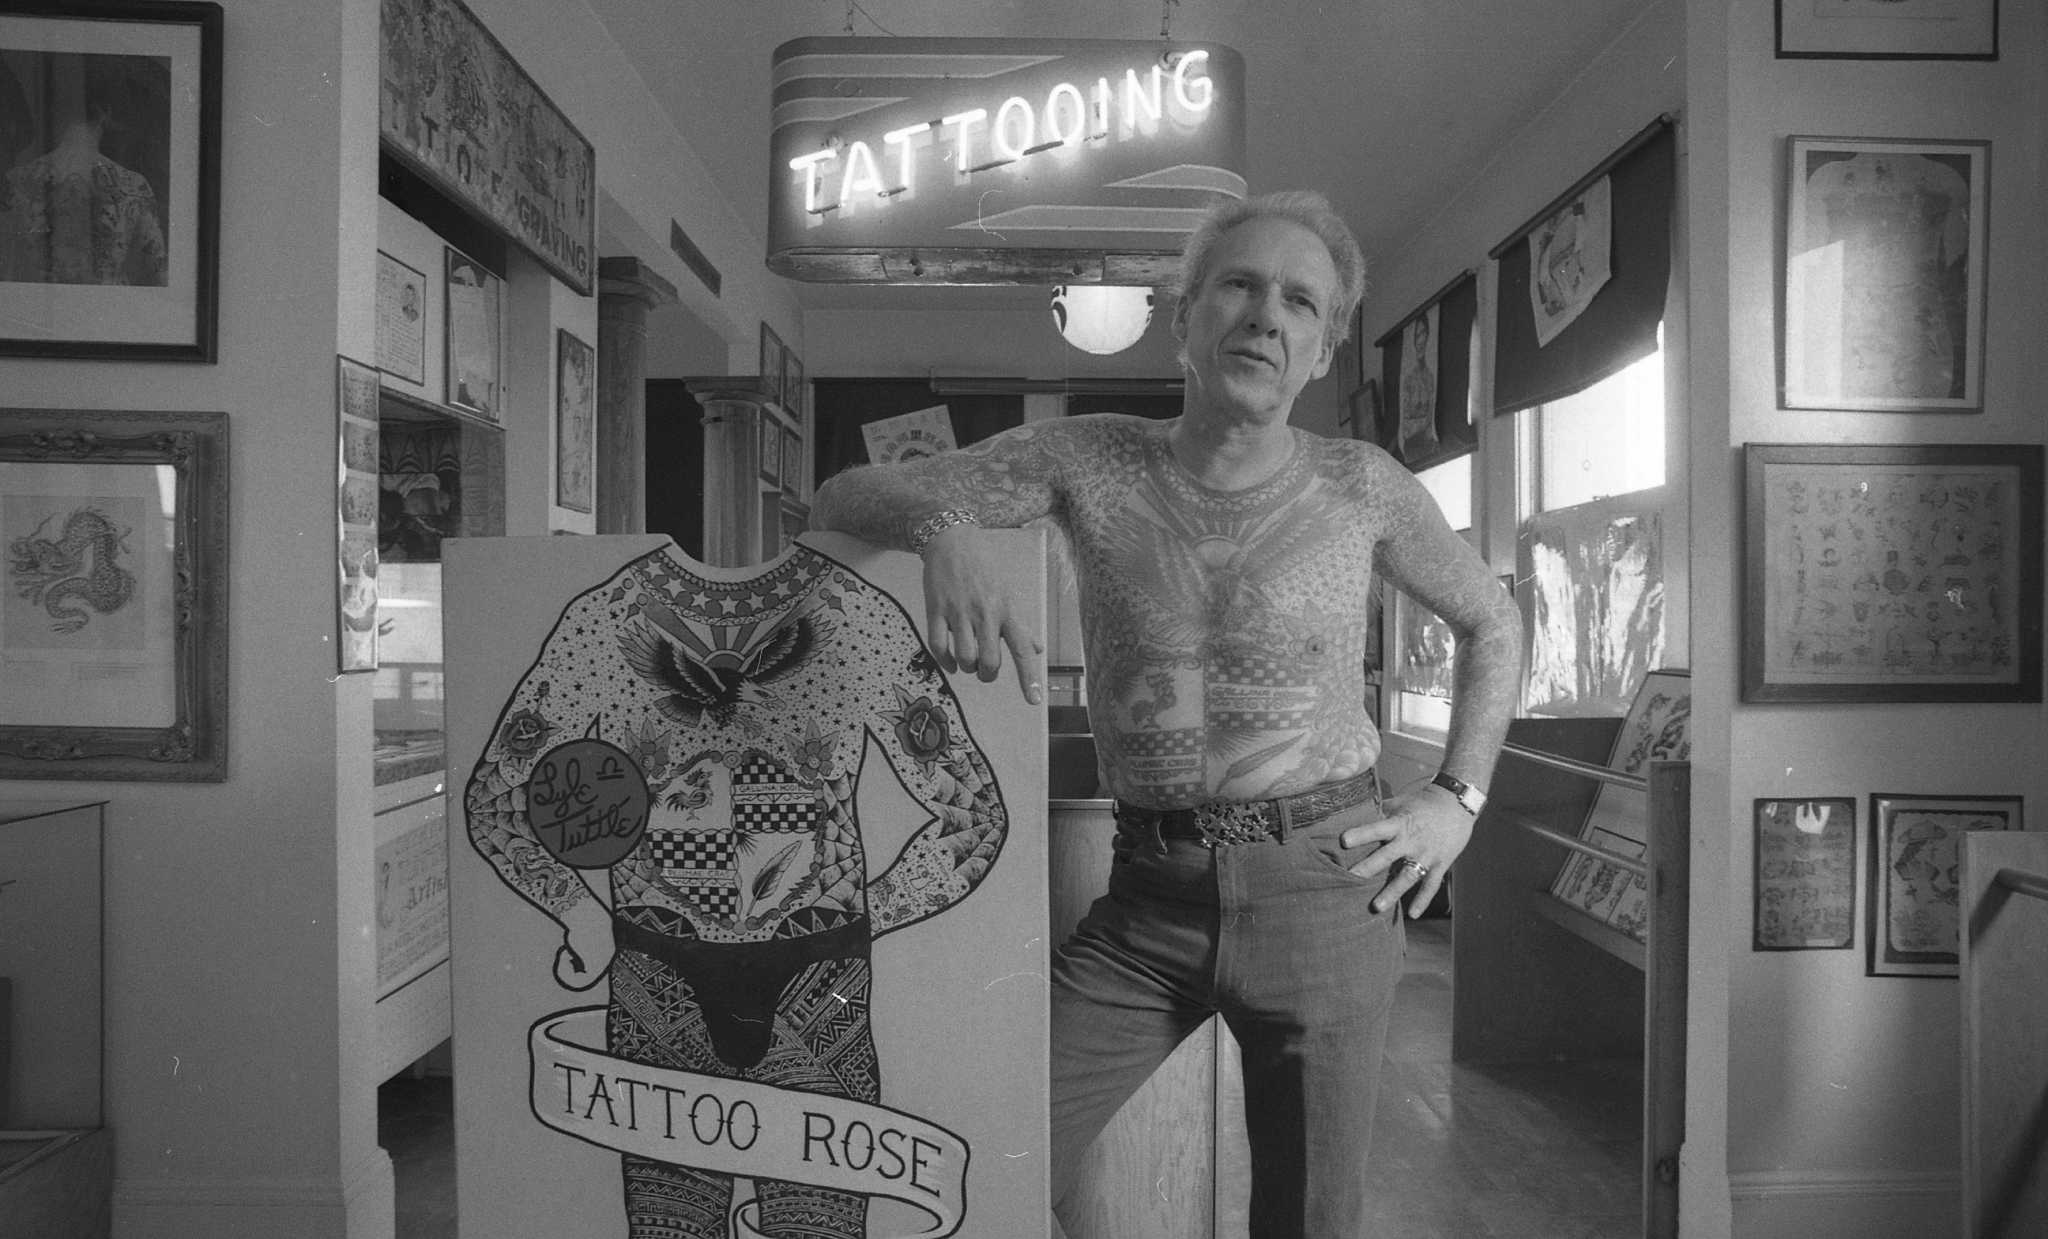 83yearold tattoo artist back in circulation